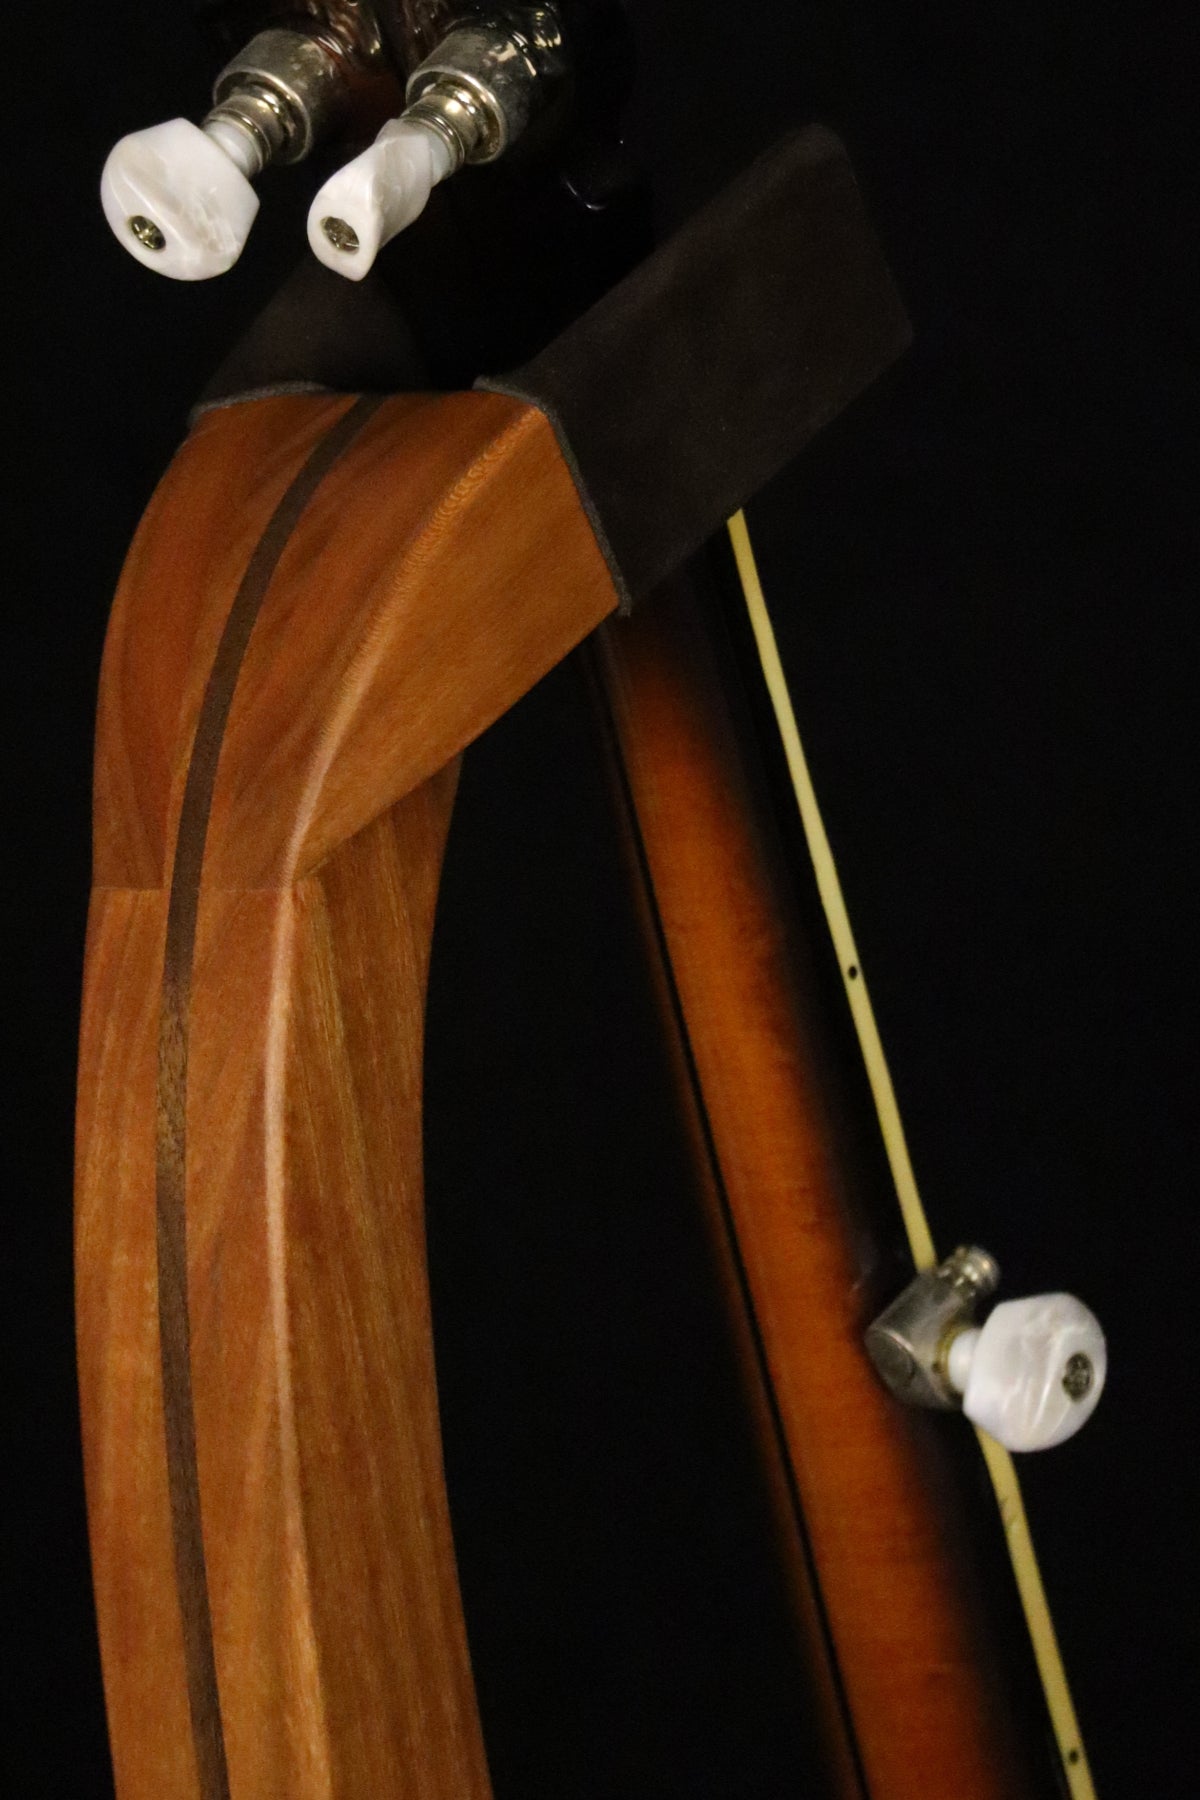 Folding cherry and walnut wood banjo floor stand yoke detail image with Alvarez banjo